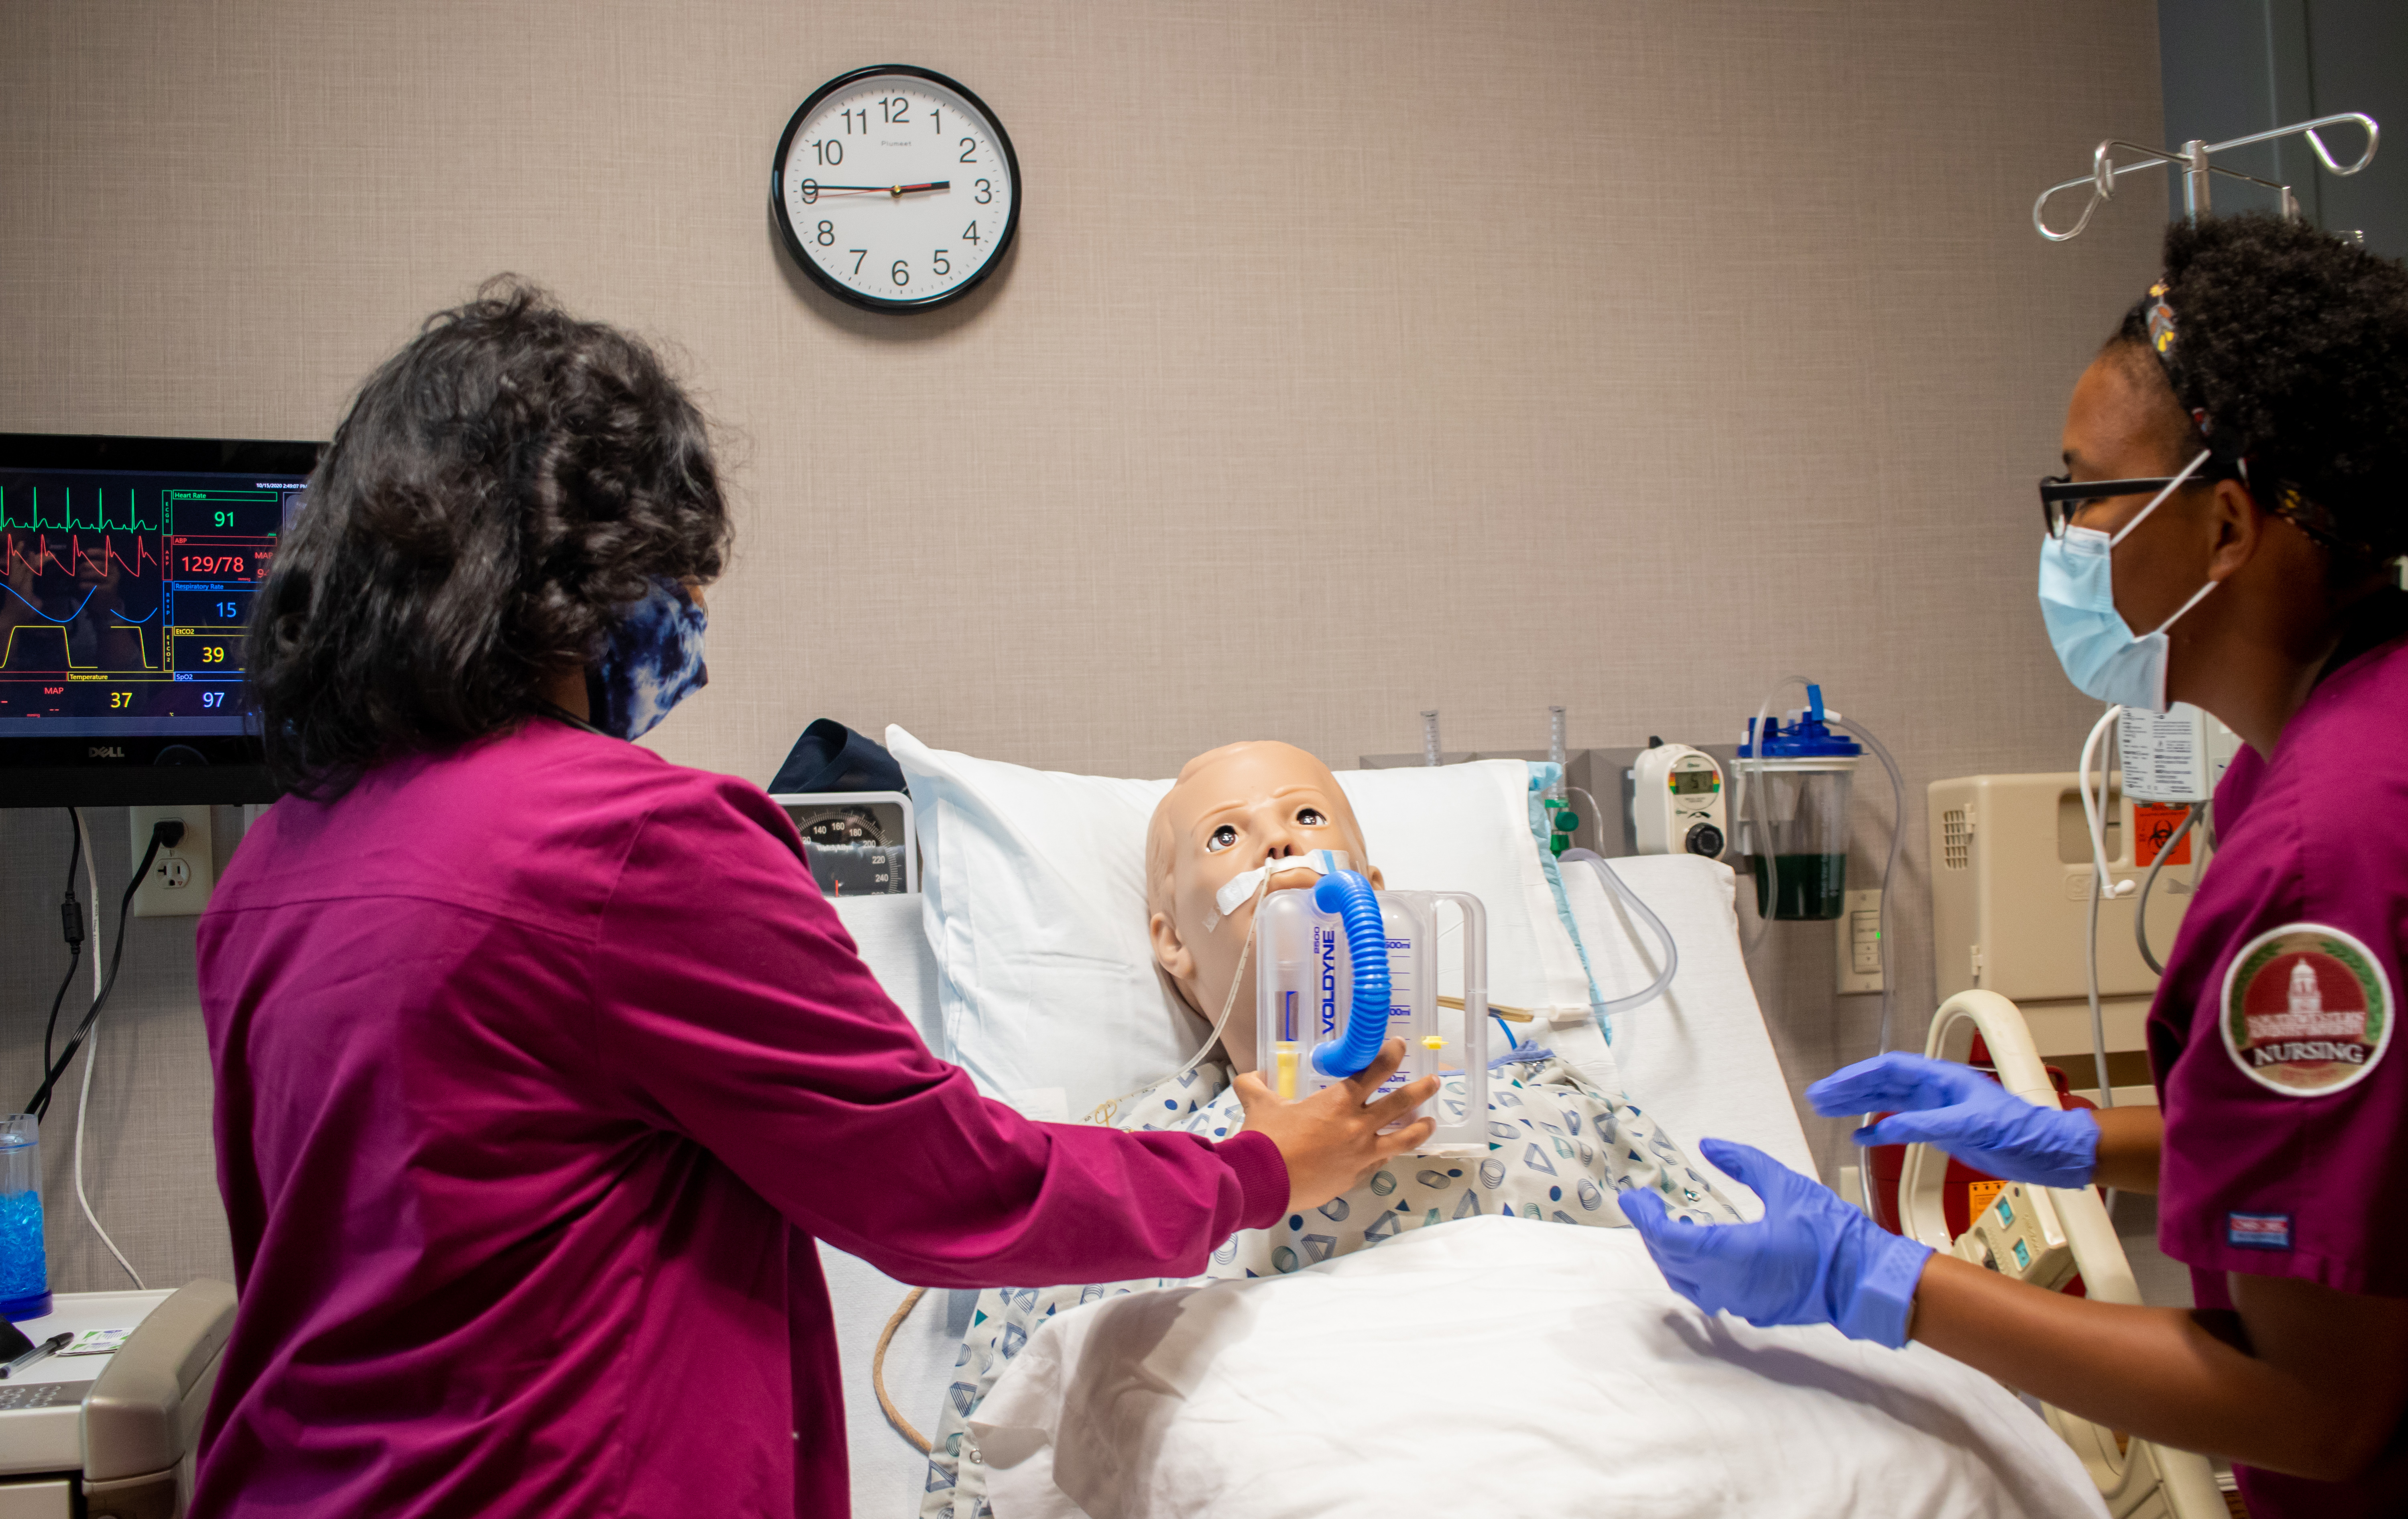 Two nurses caring for a medical simulation manikin